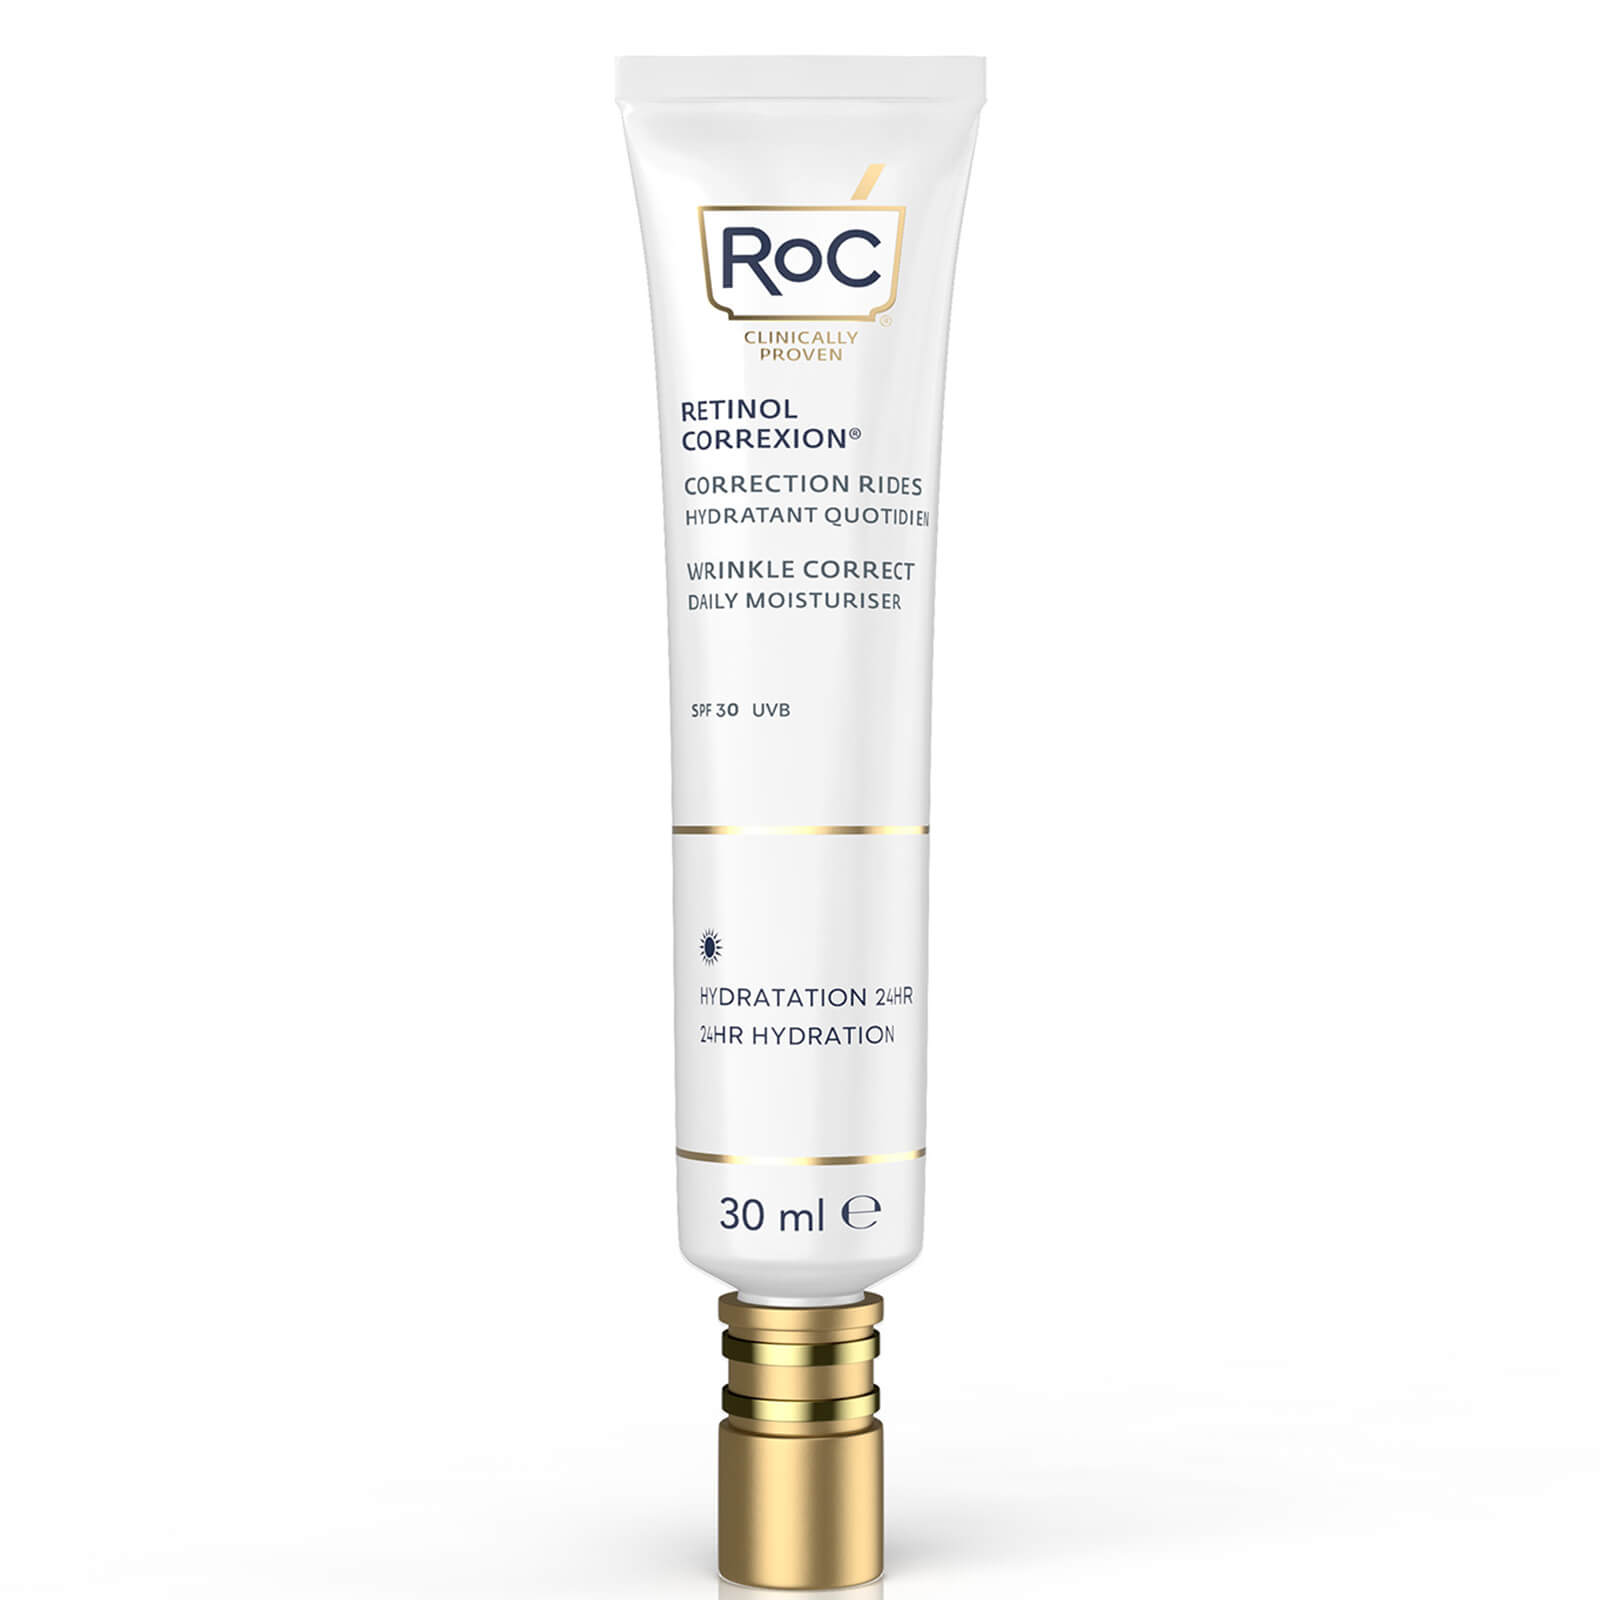 RoC Retinol Correxion Wrinkle Correct Daily Moisturiser SPF30 30 ml